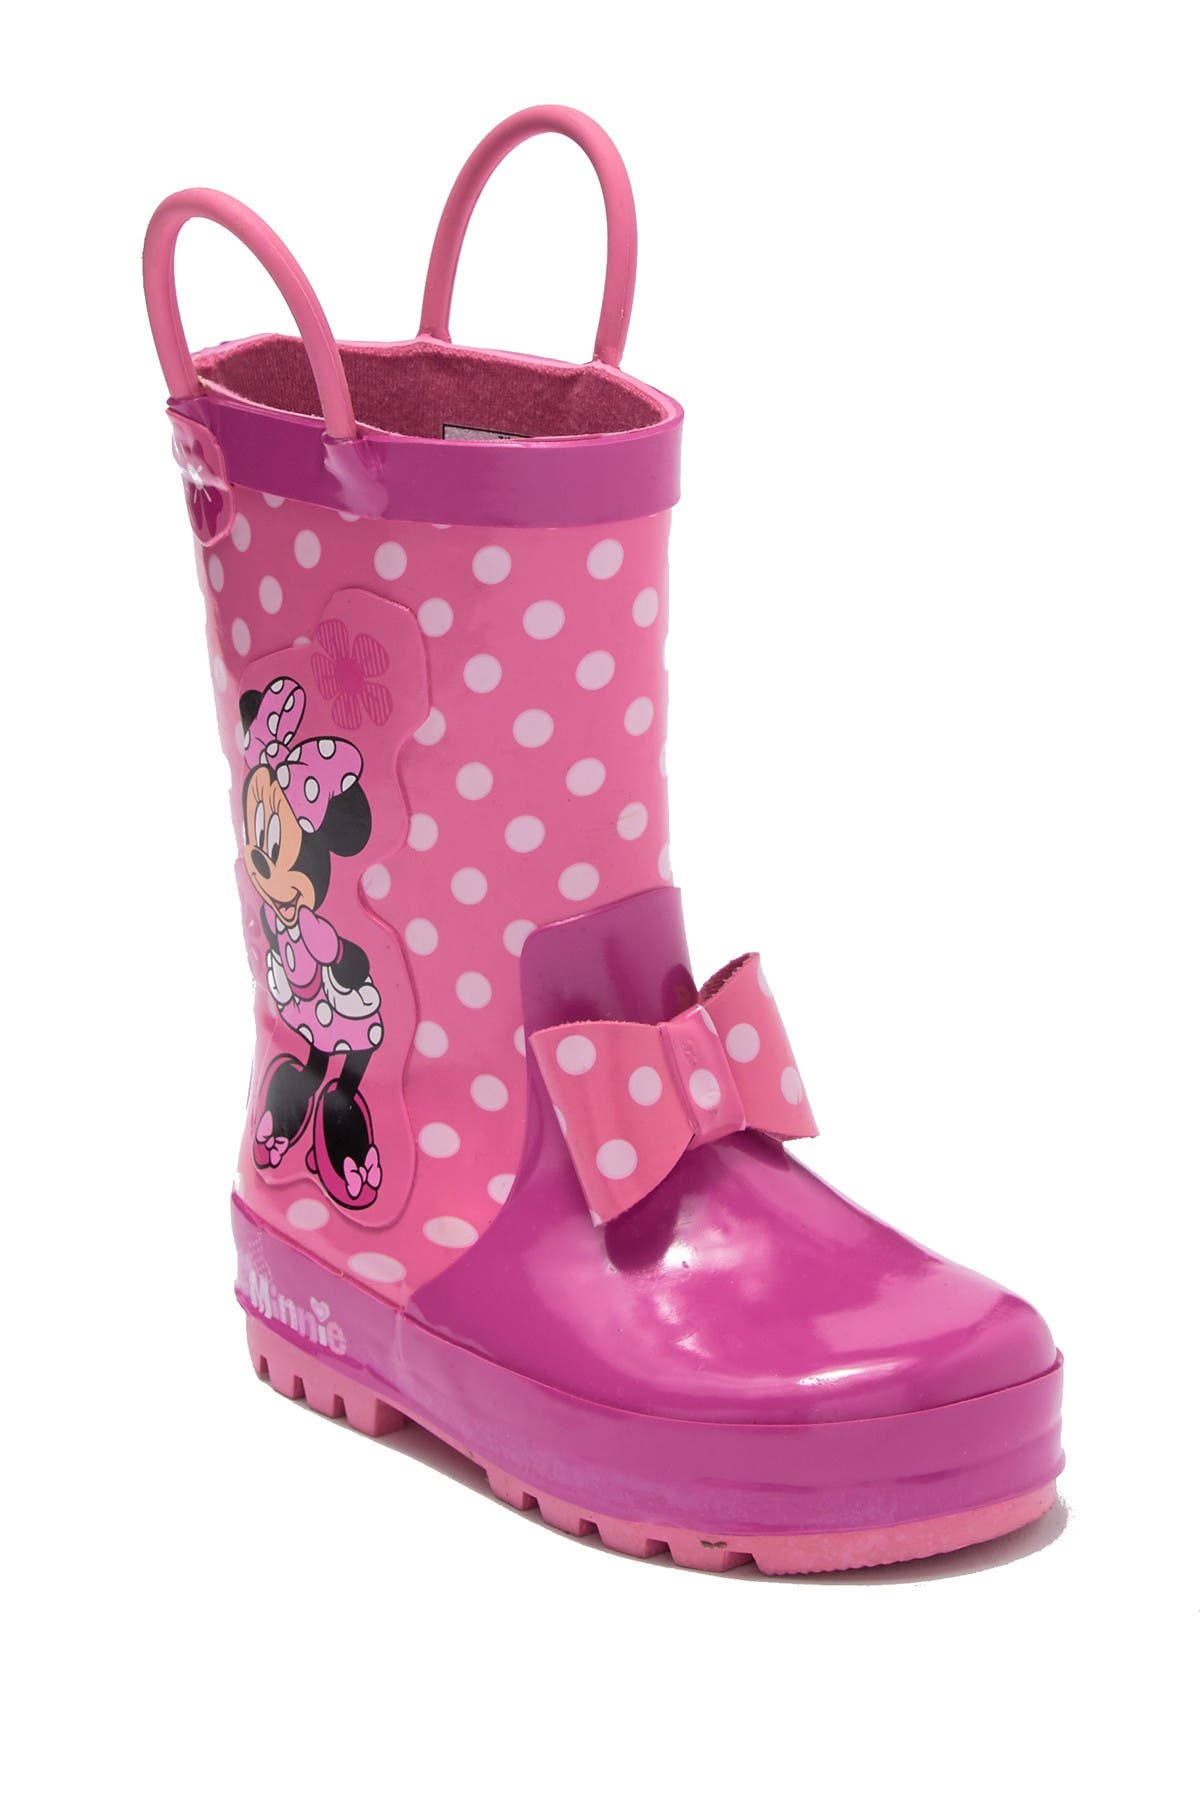 minnie mouse rain boots